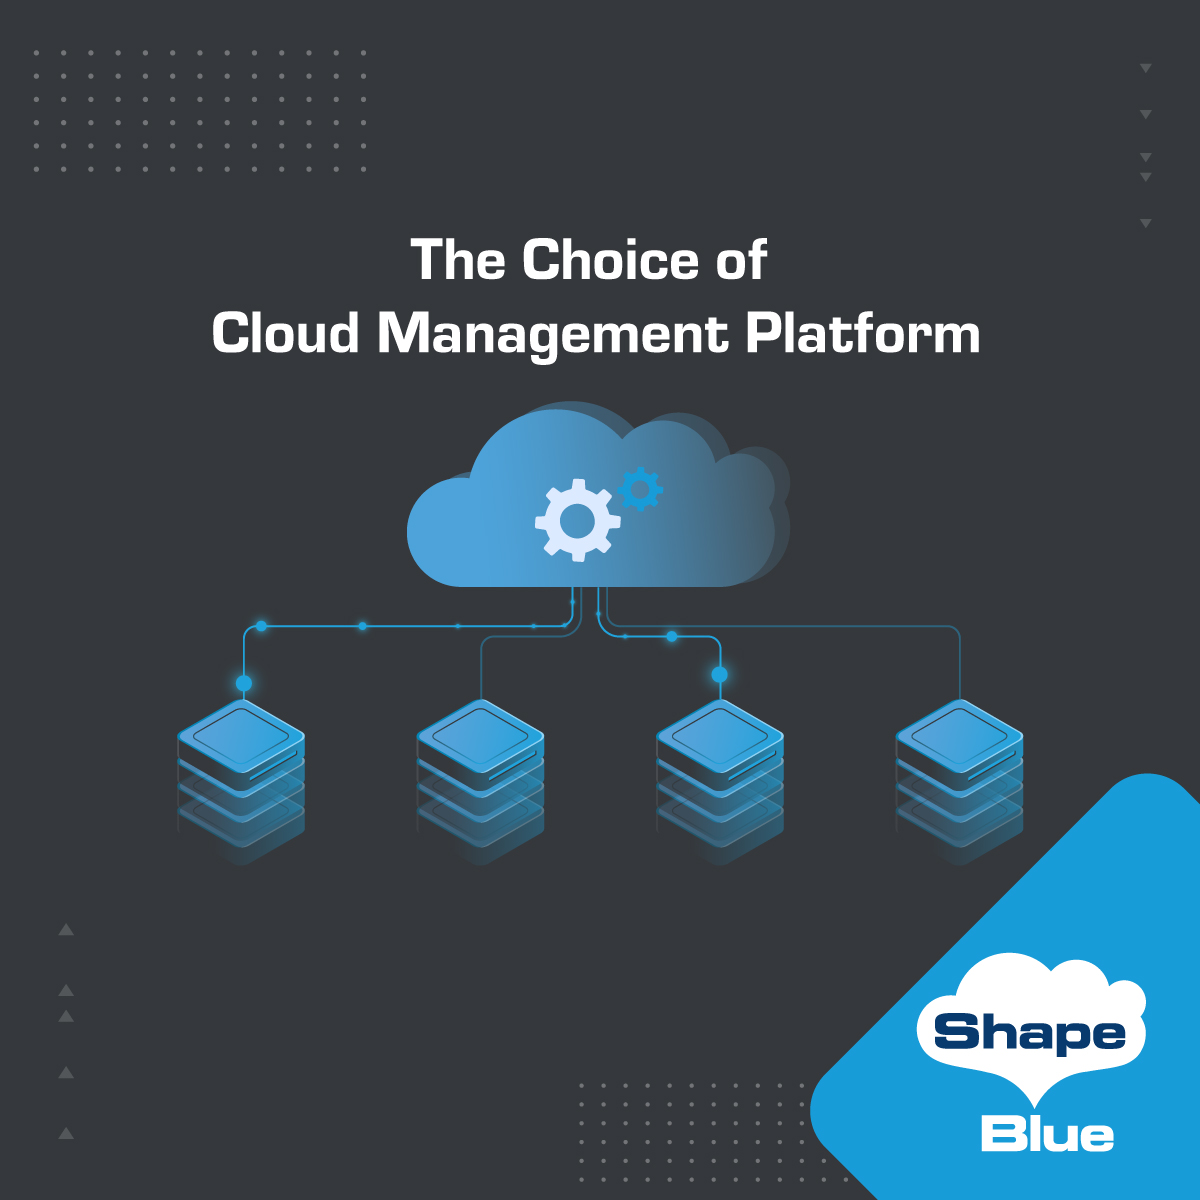 The Choice of Cloud Management Platform